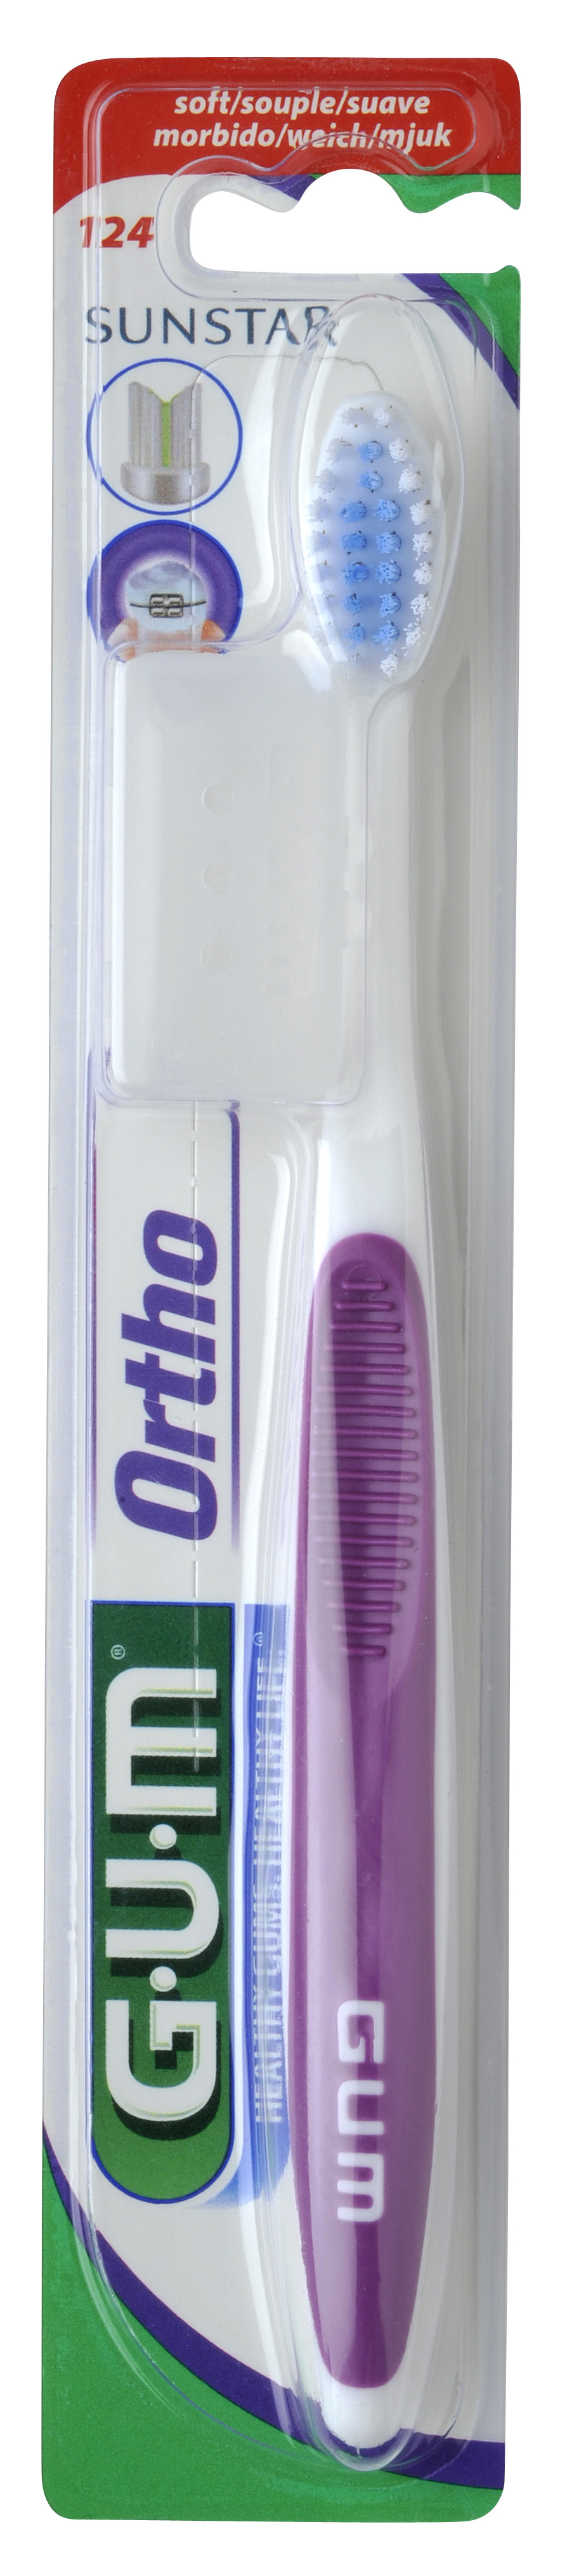 GUM Orthodontic Toothbrush with Cap